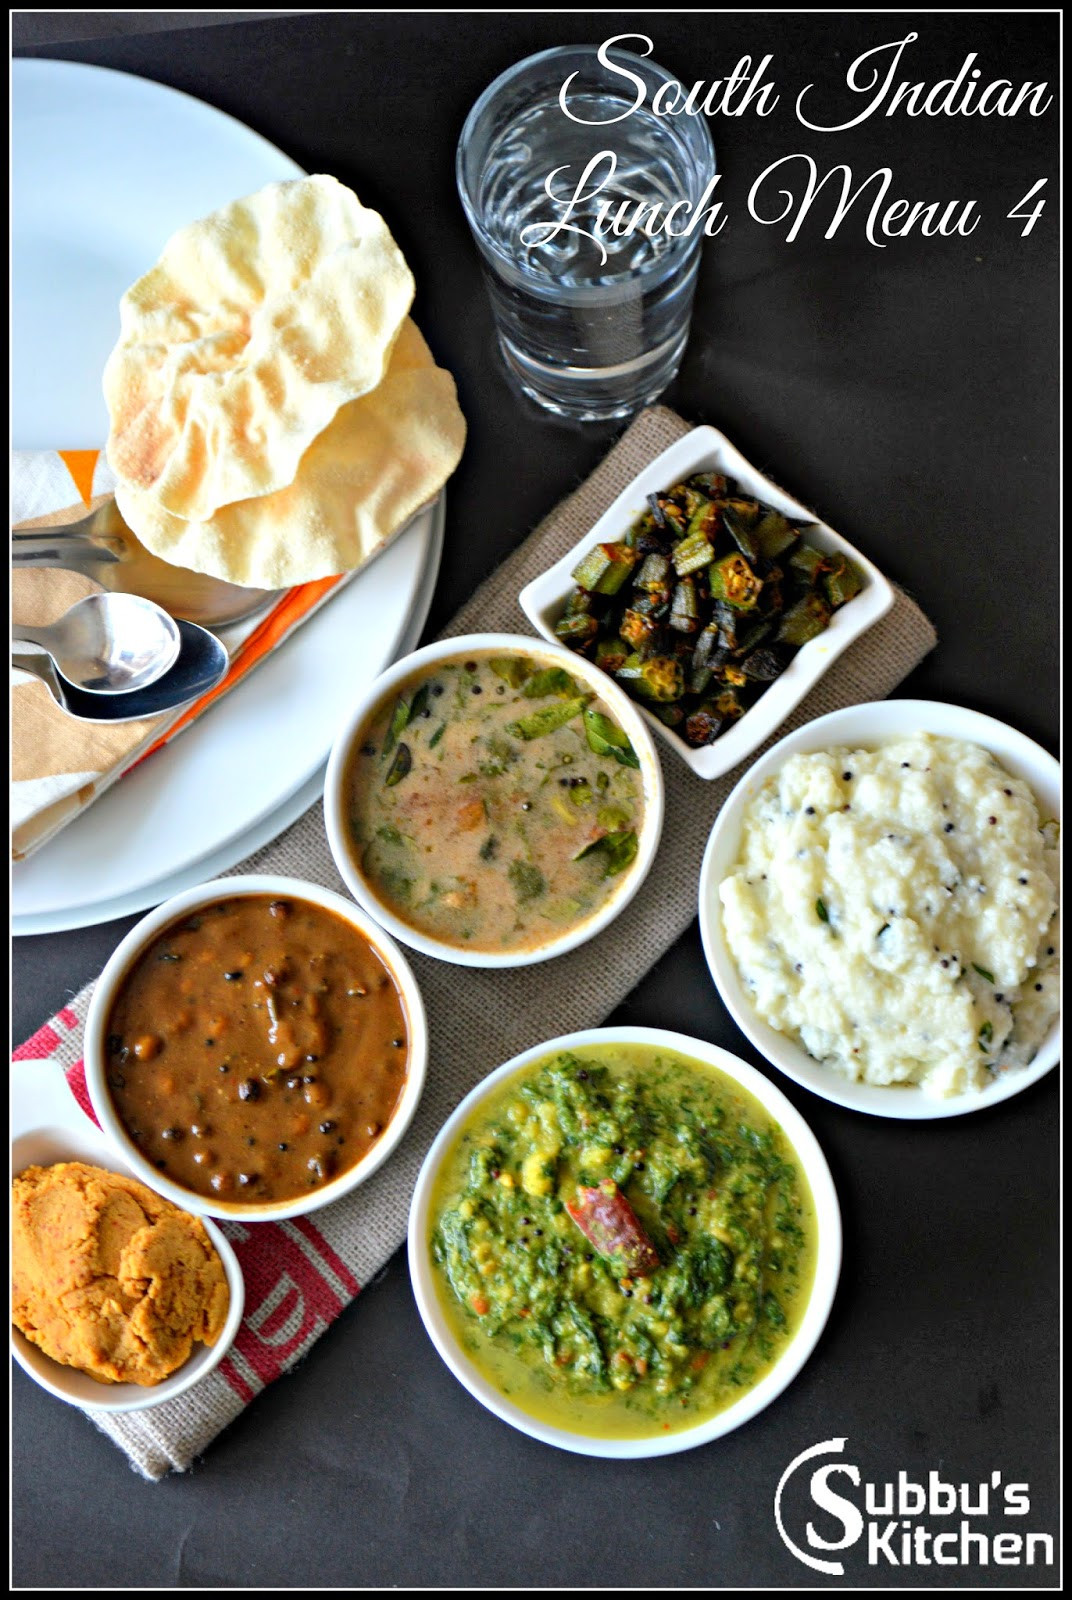 South Indian Lunch Recipes
 South Indian Lunch Menu 4 Vathakuzhambu Araitha Rasam